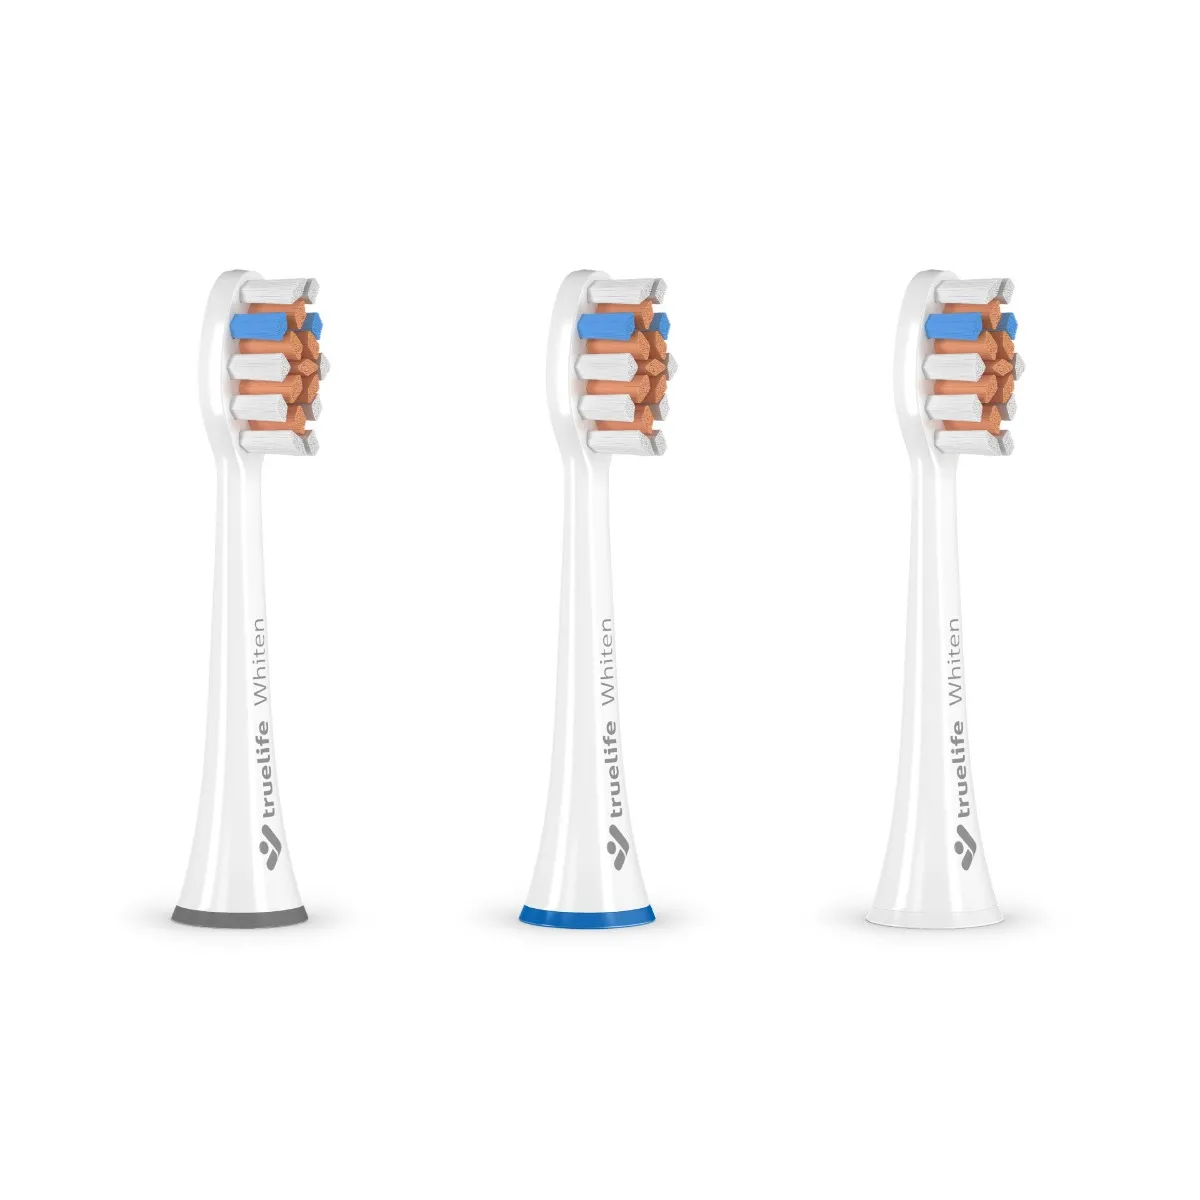 TrueLife SonicBrush UV-series heads Sensitive white 3 pack 1×3 kusy, náhradné hlavice